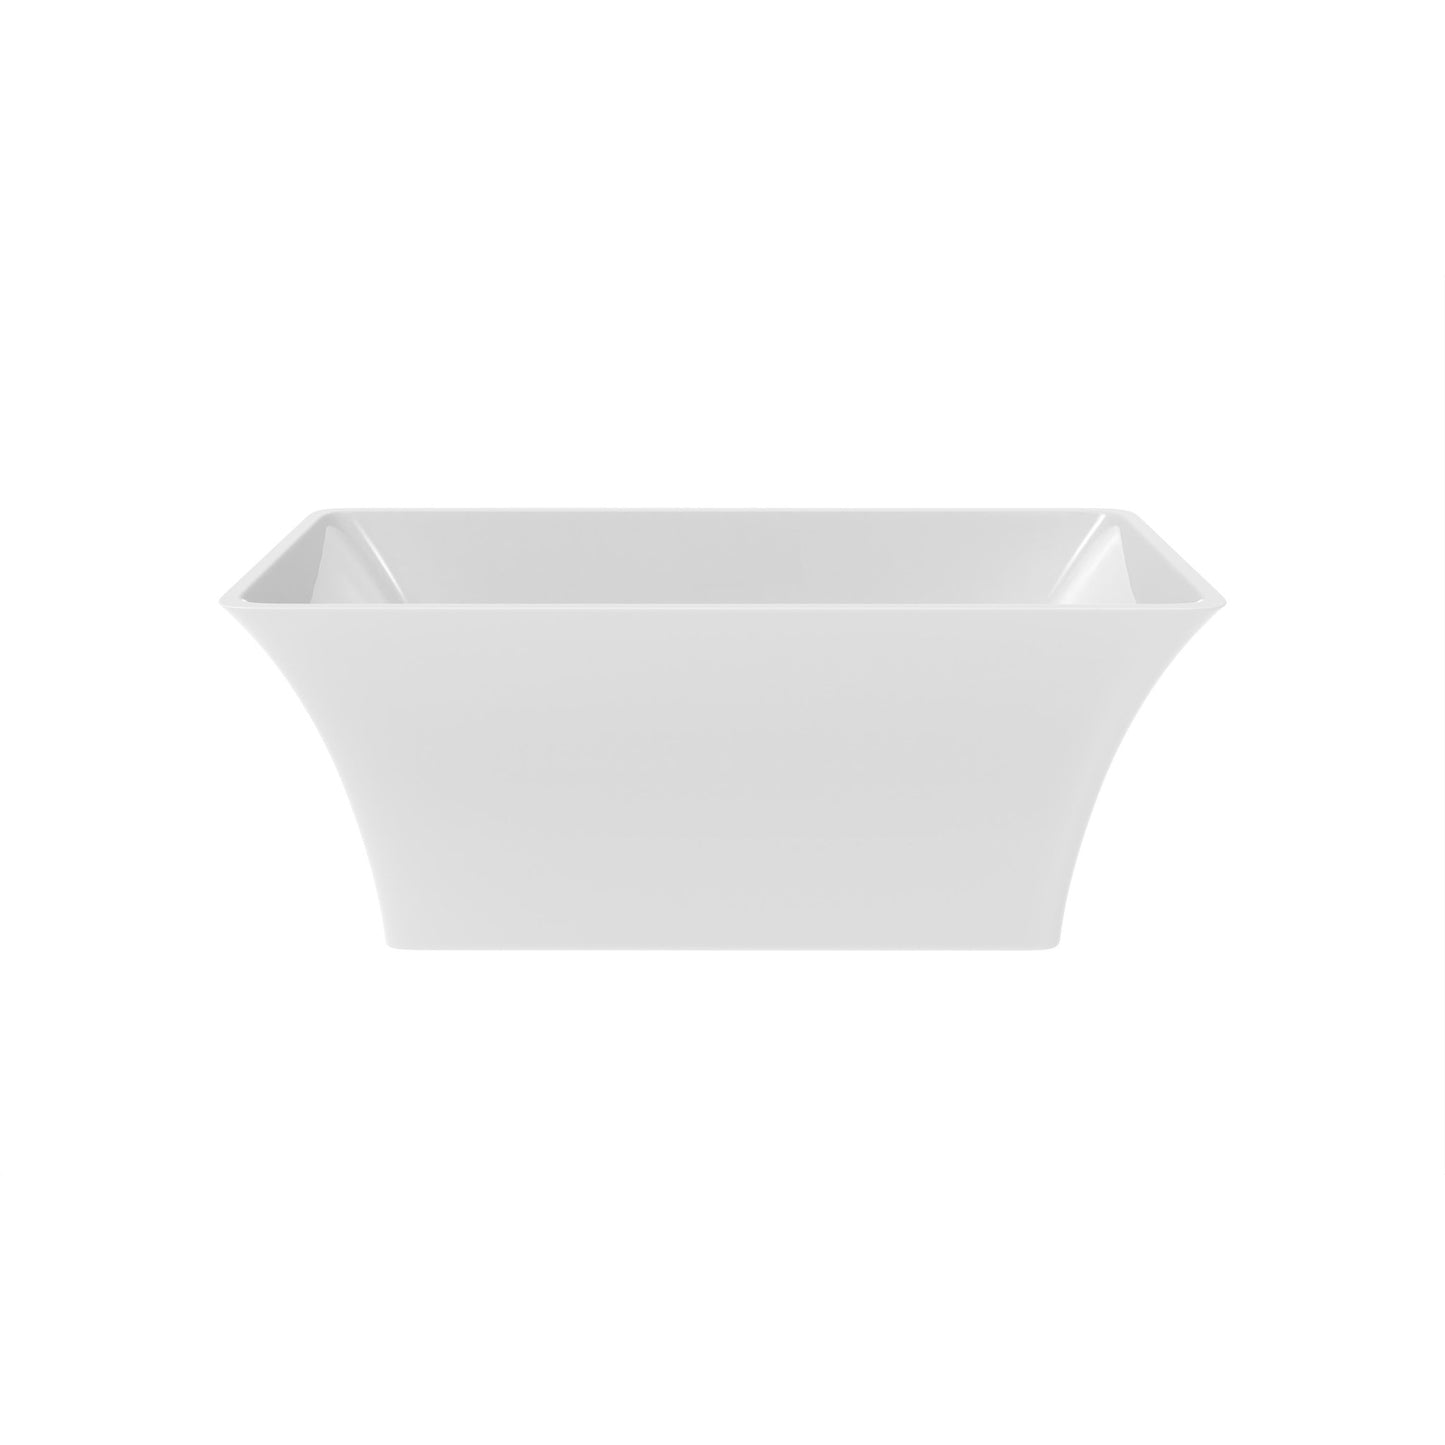 Castello USA Blaire 59" White Acrylic Freestanding Bathtub With Pop-up Drain